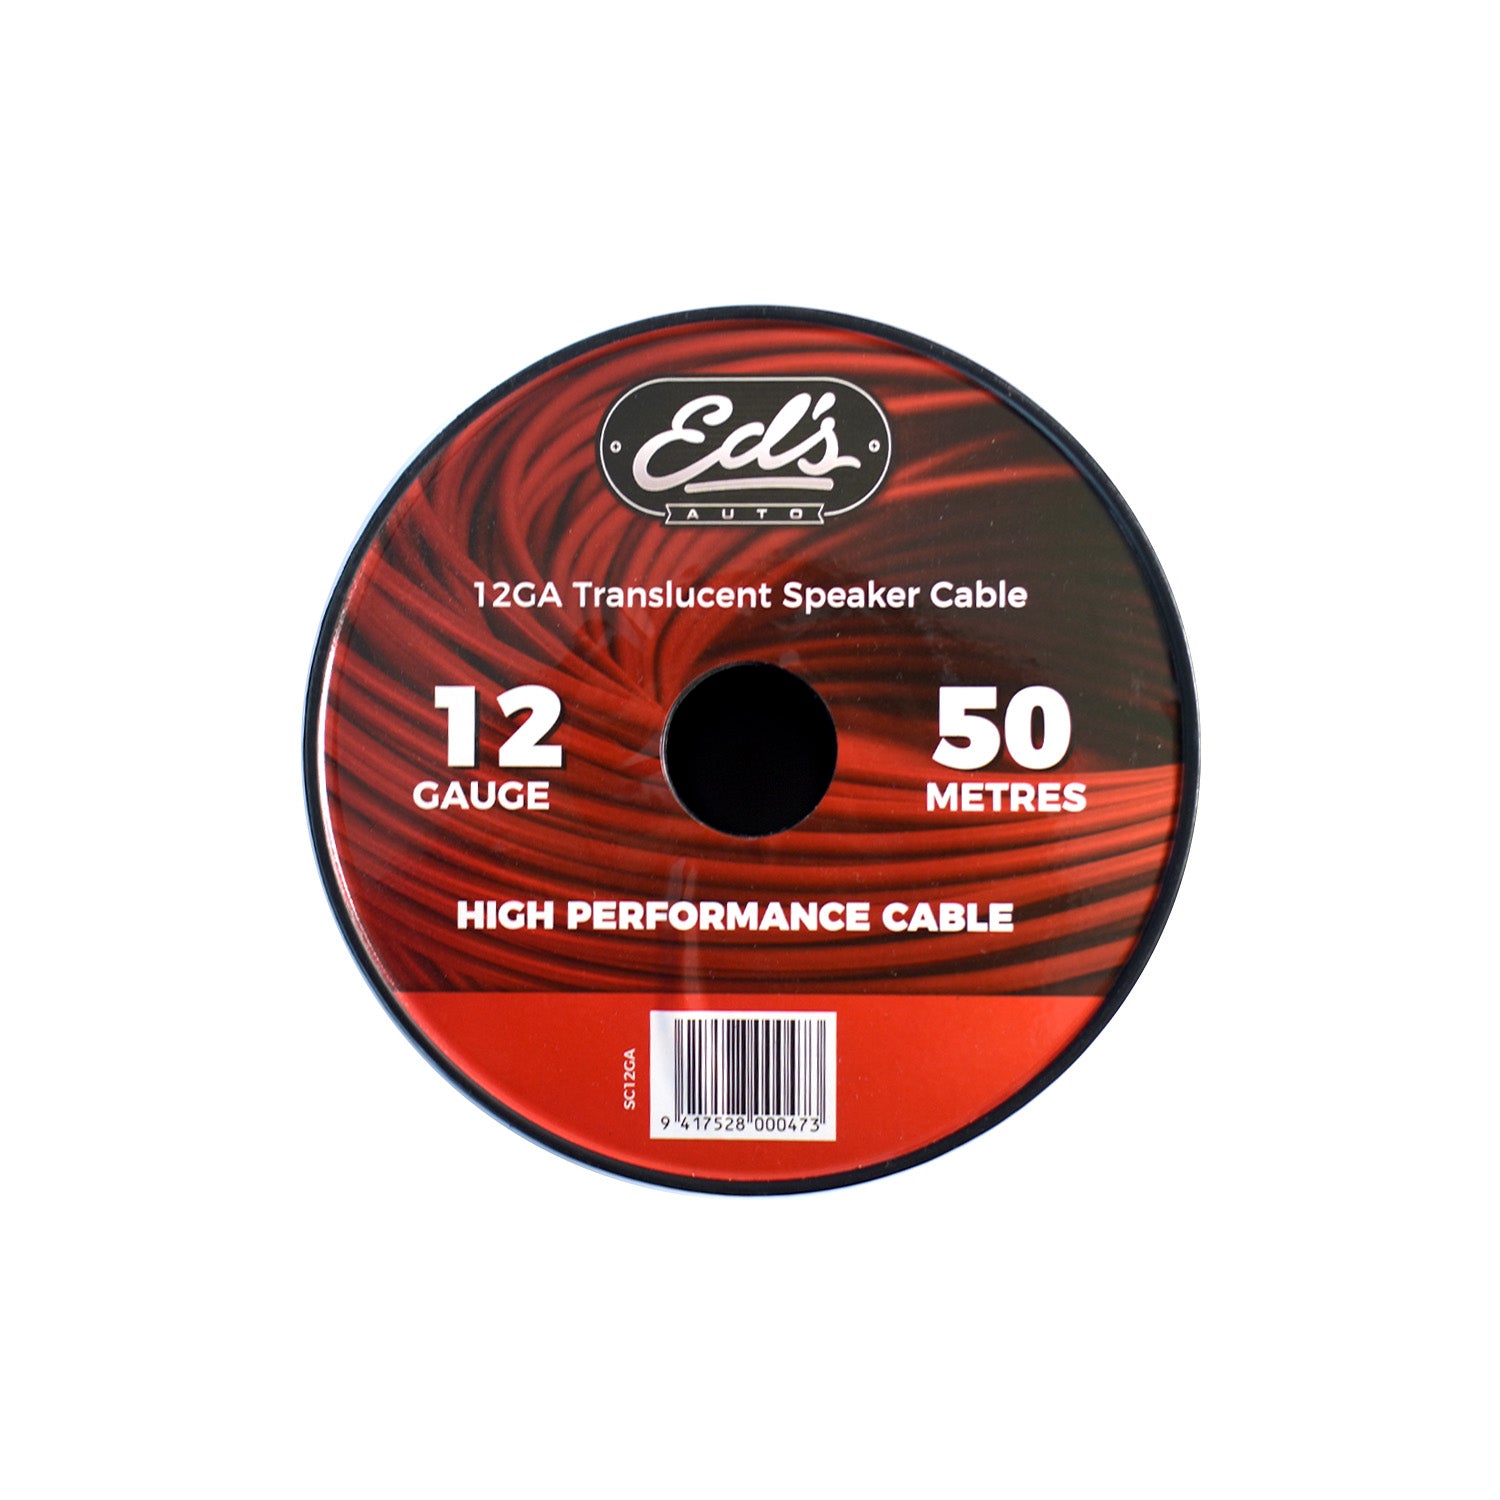 Eds 12 Gauge Cca Speaker Cable 50M Translucent Clear